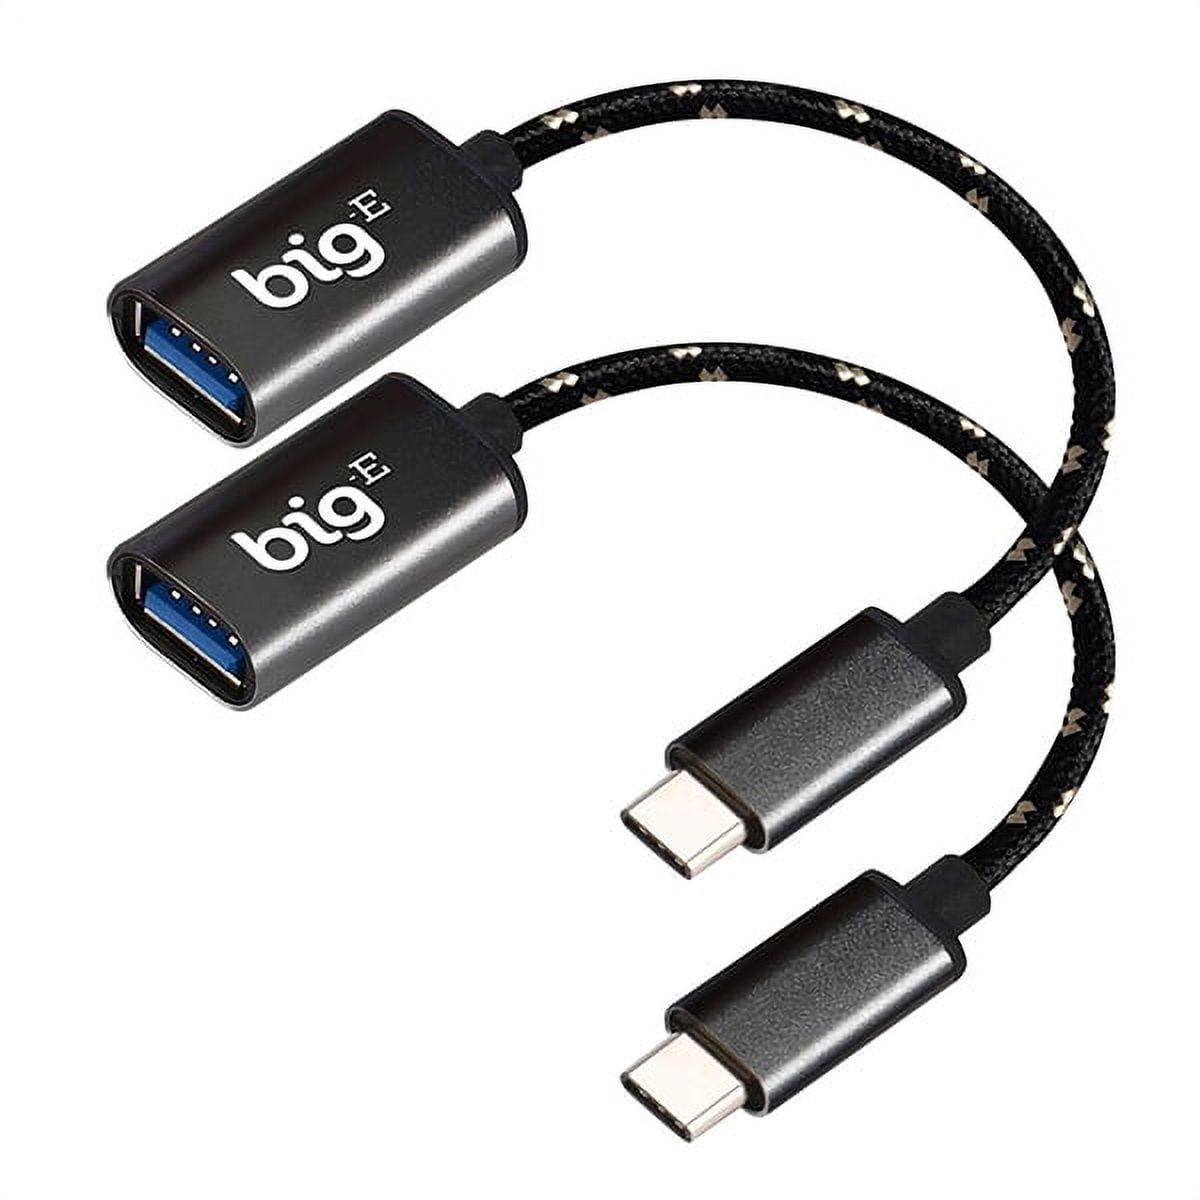  Chromecast Ethernet Adapter, Micro USB OTG Hub to Attach Thumb  Drive : Electronics